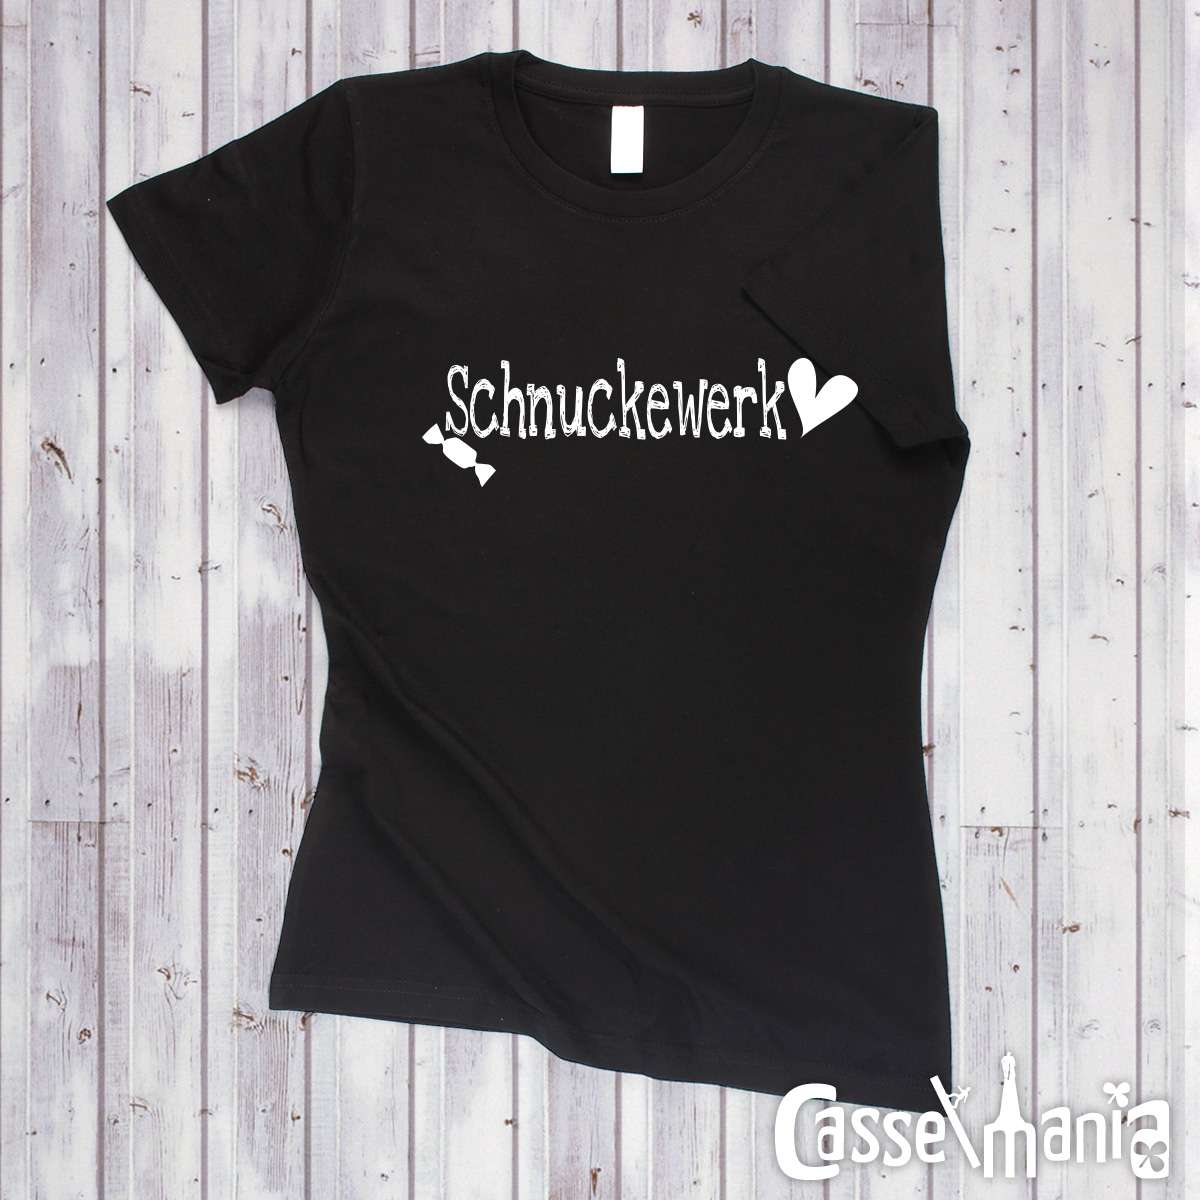 Schnuckewerk - Women